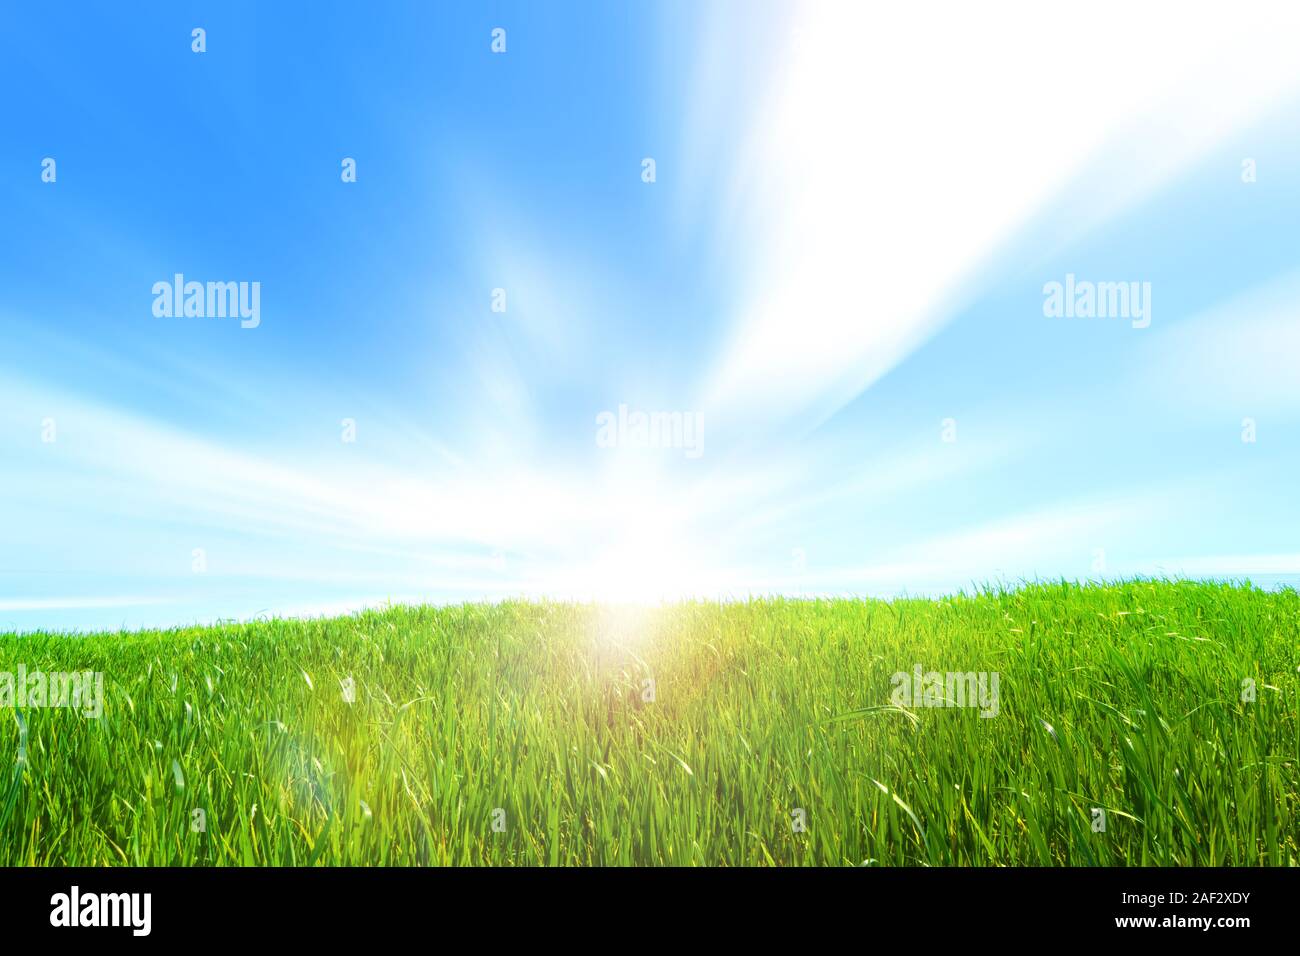 La molla verde erba è sorto su una collina con un bel cielo luminoso Foto Stock